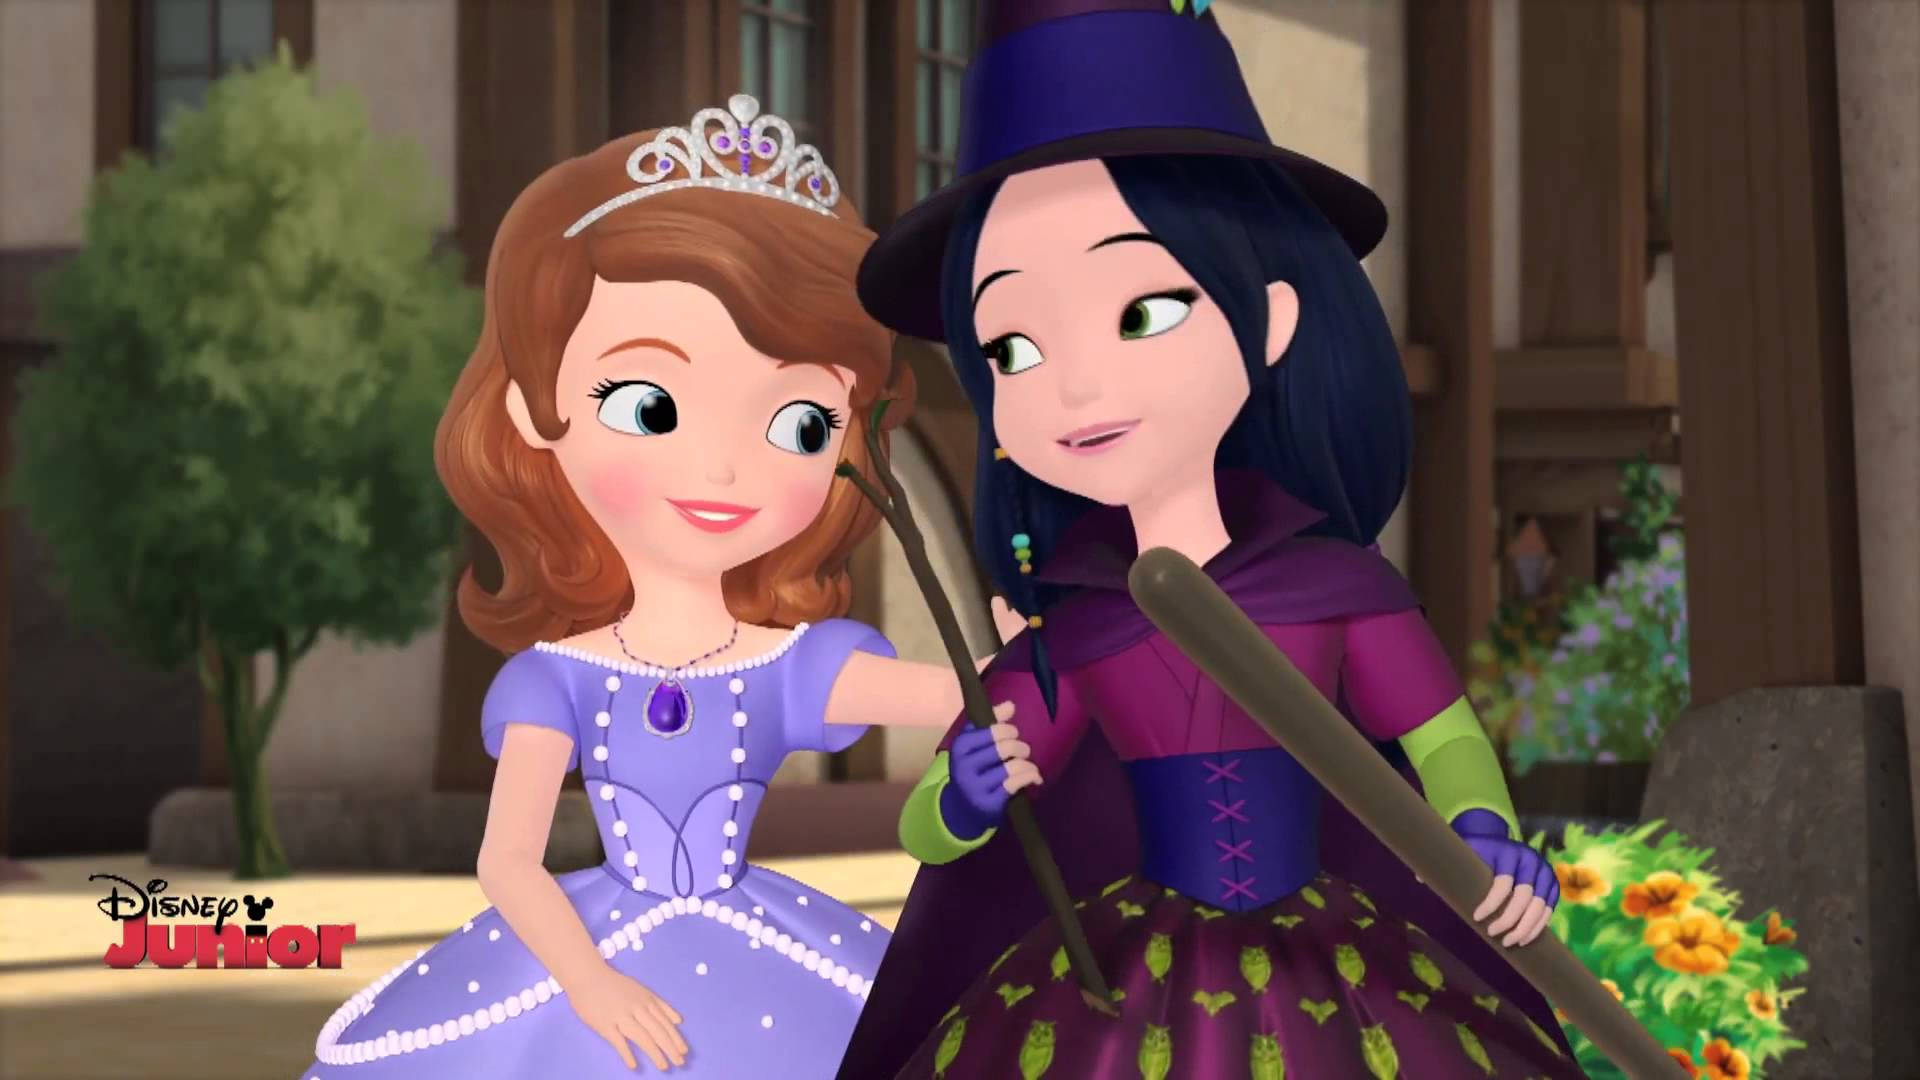 Princess Sofia With Her Witch Friend Background